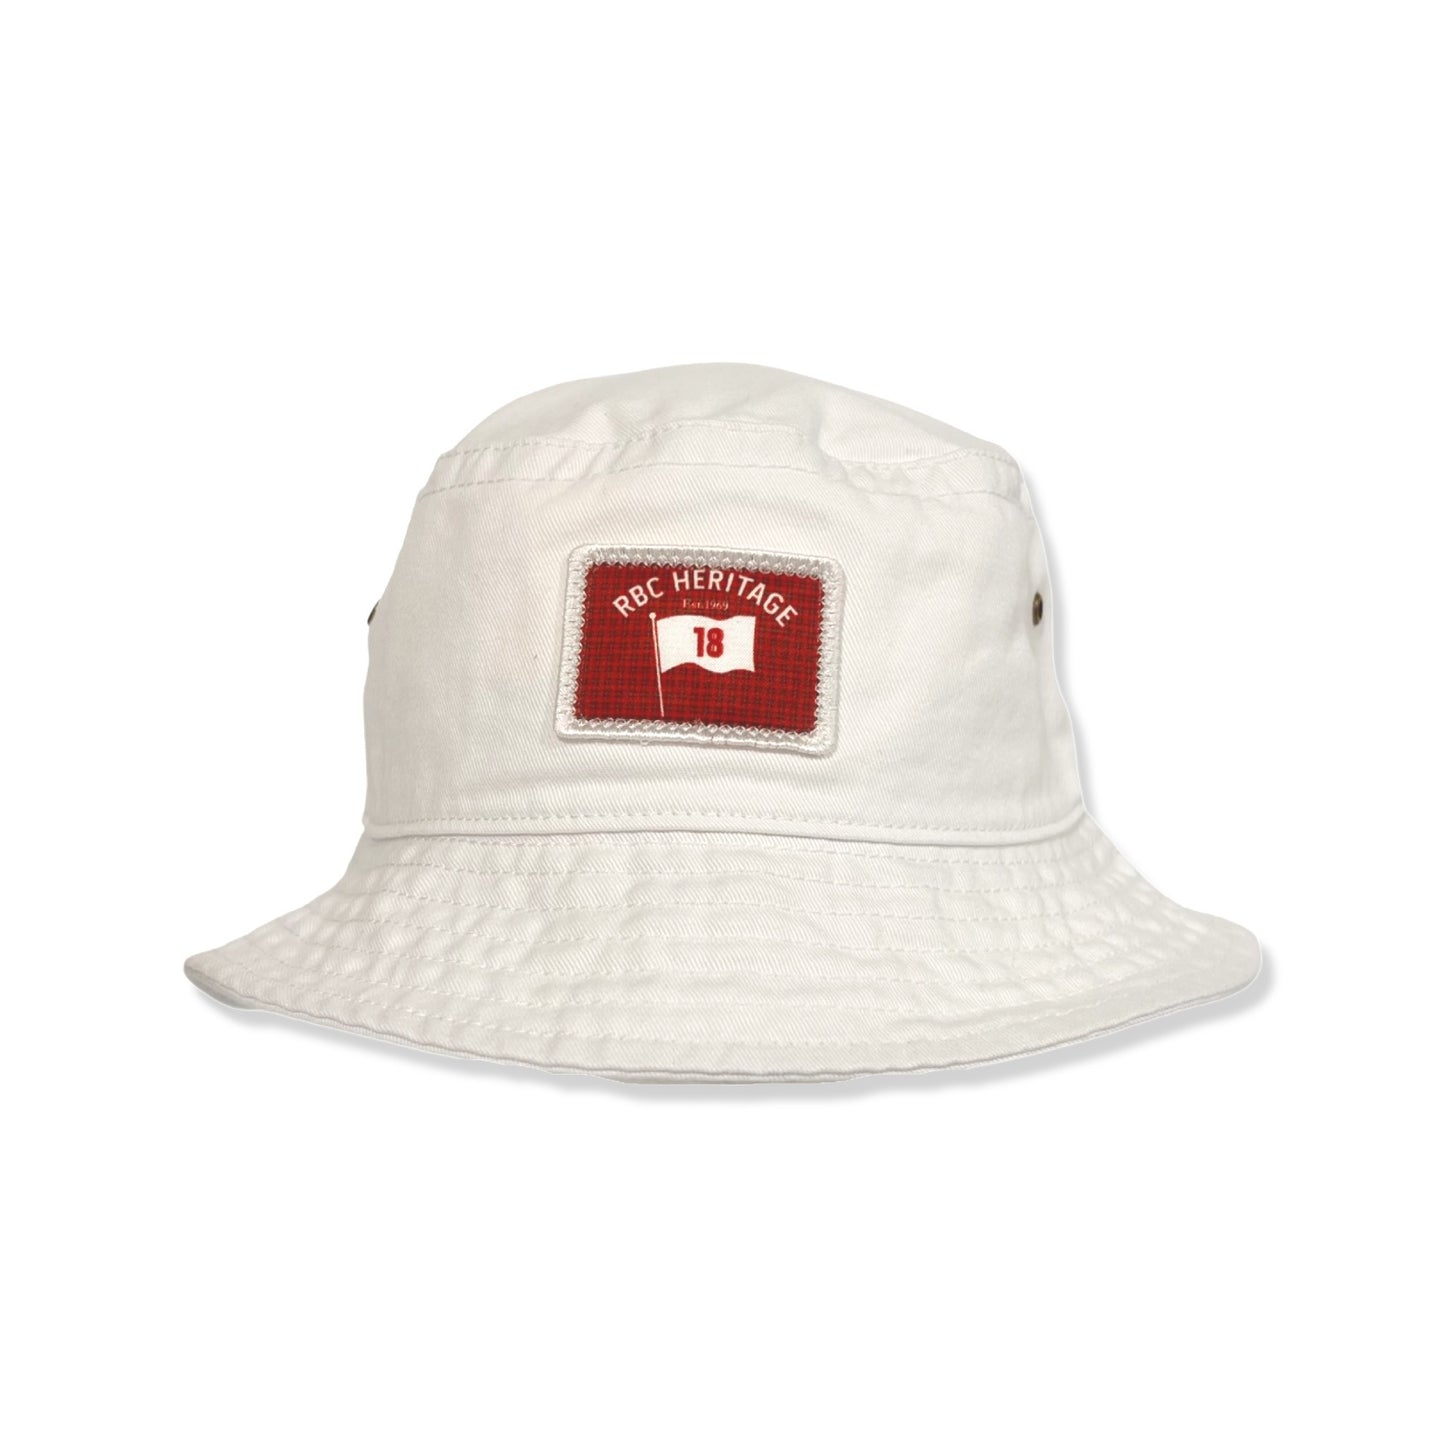 RBC Heritage Pin Flag Bucket Hat - White